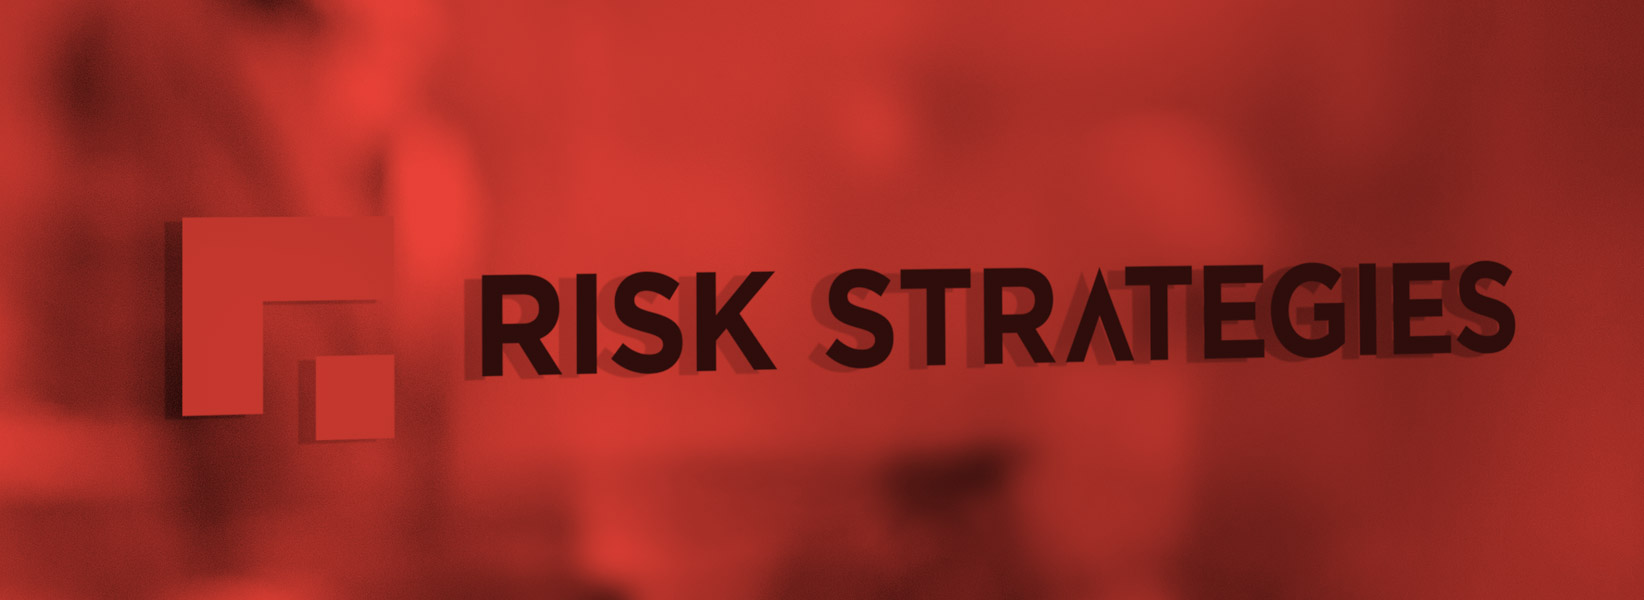 Risk Strategies - Header Image